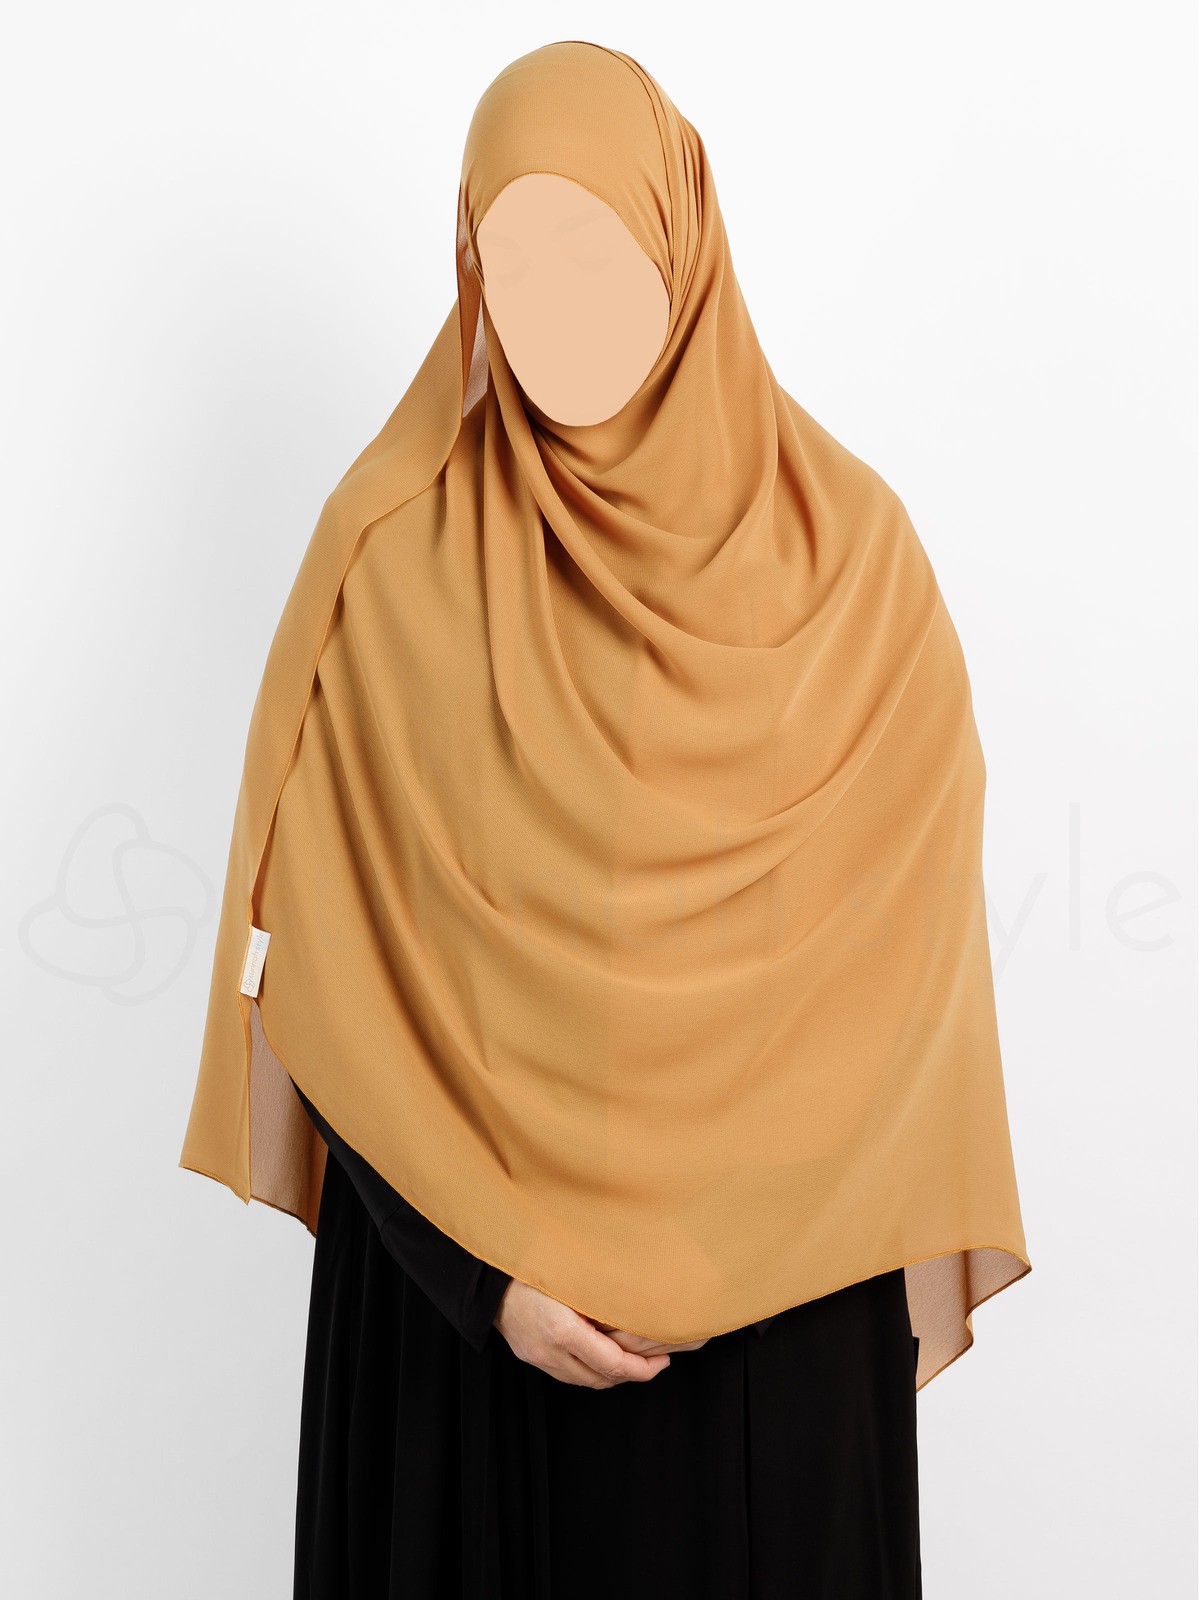 Sunnah Style - Essentials Shayla (Premium Chiffon) - XL (Parfait)